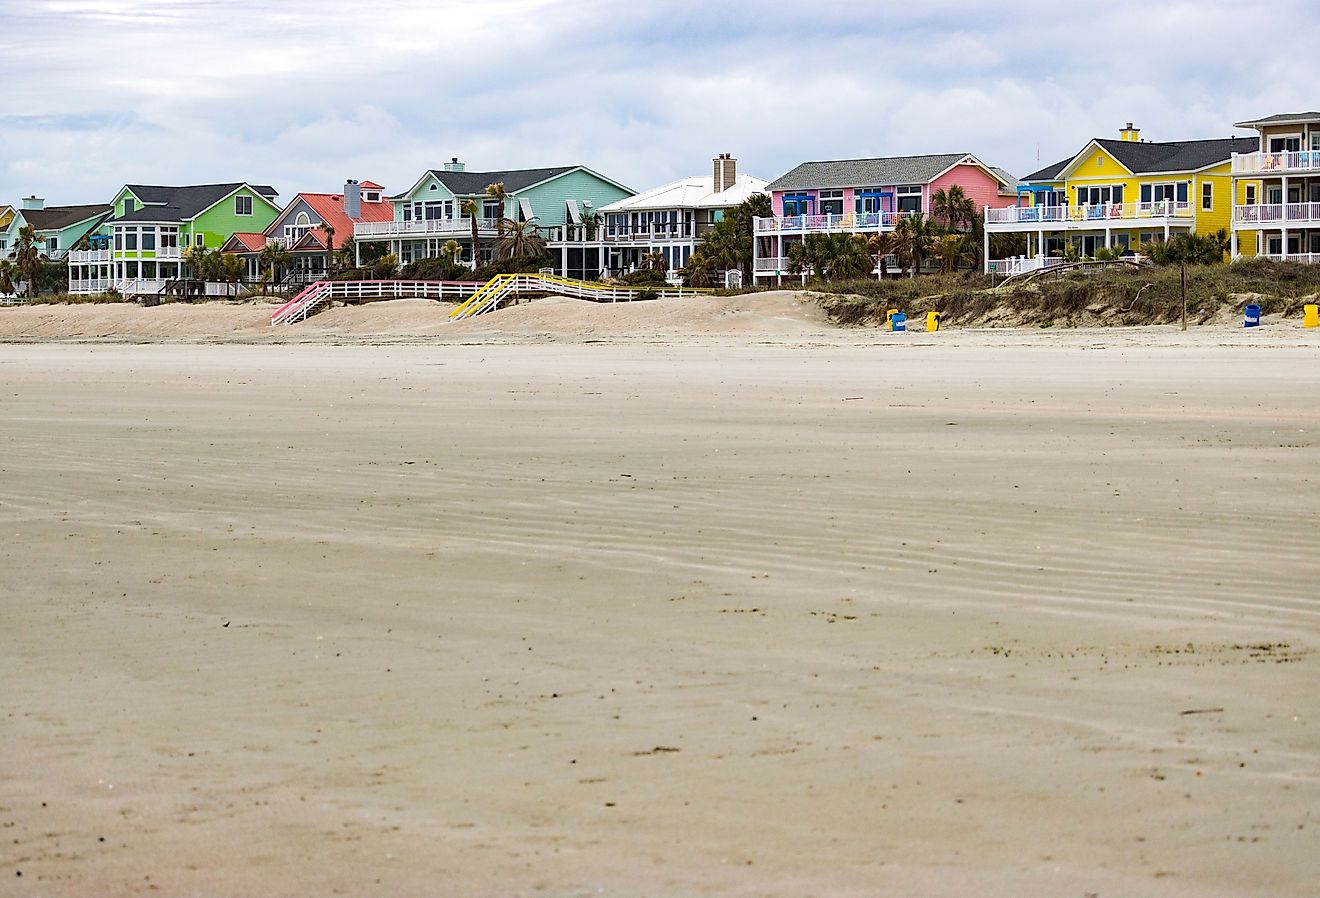 Colorful beach houses on the Isle of Palms, South Carolina.